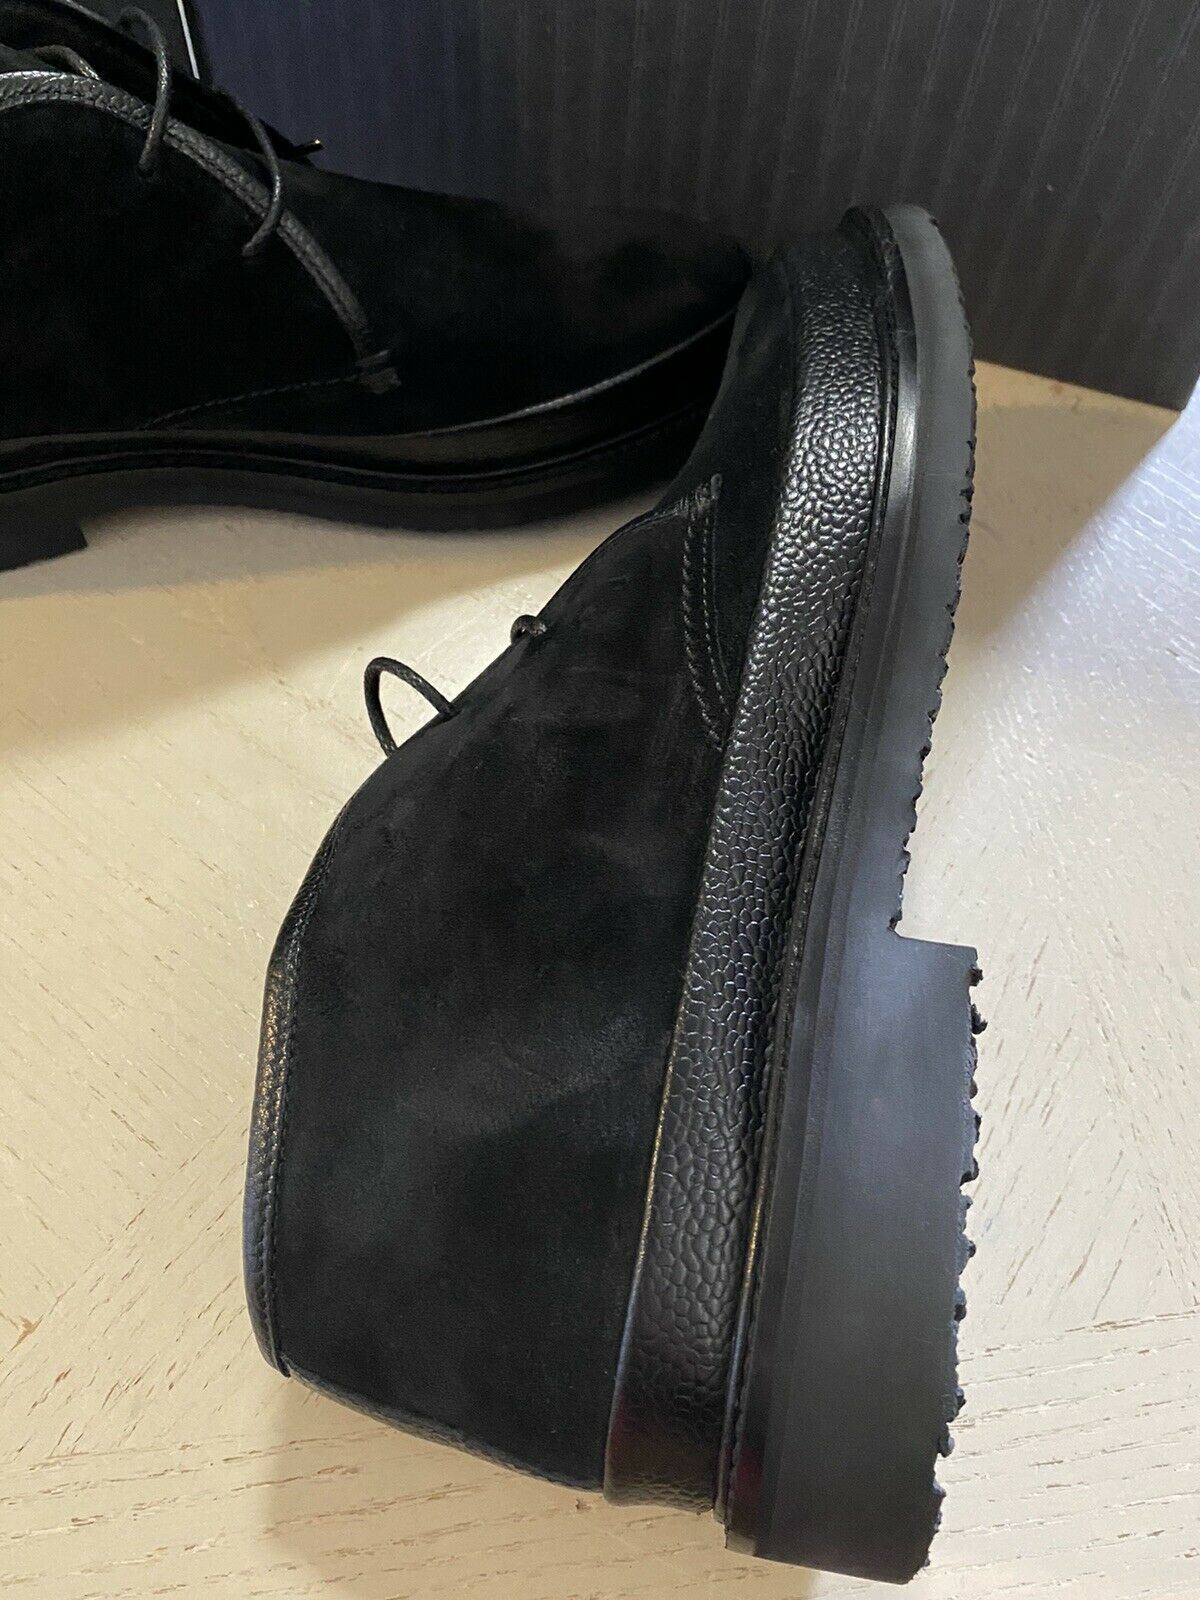 New $650 Ermenegildo Zegna Suede/Leather Boots Shoes Black 9 US Italy